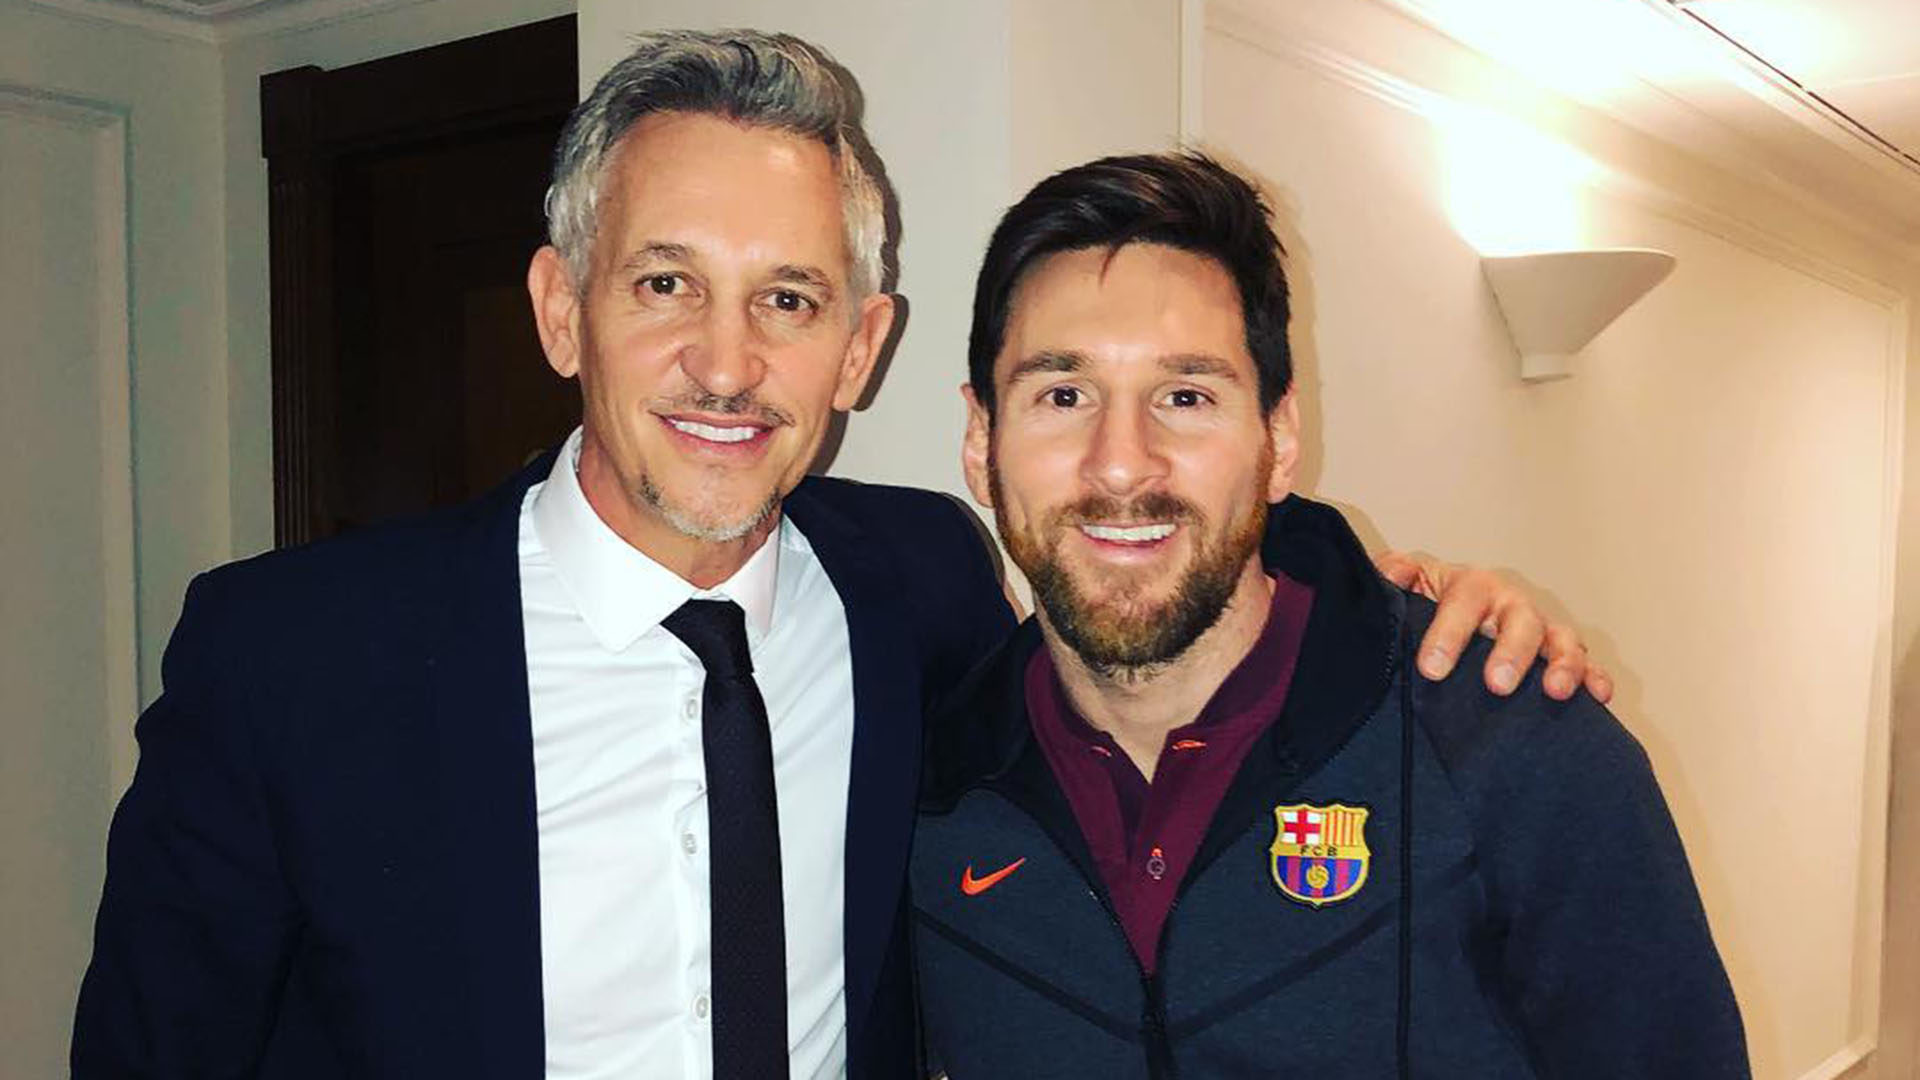 El día que Lineker conoció a Messi. El inglés también jugó en el Barcelona